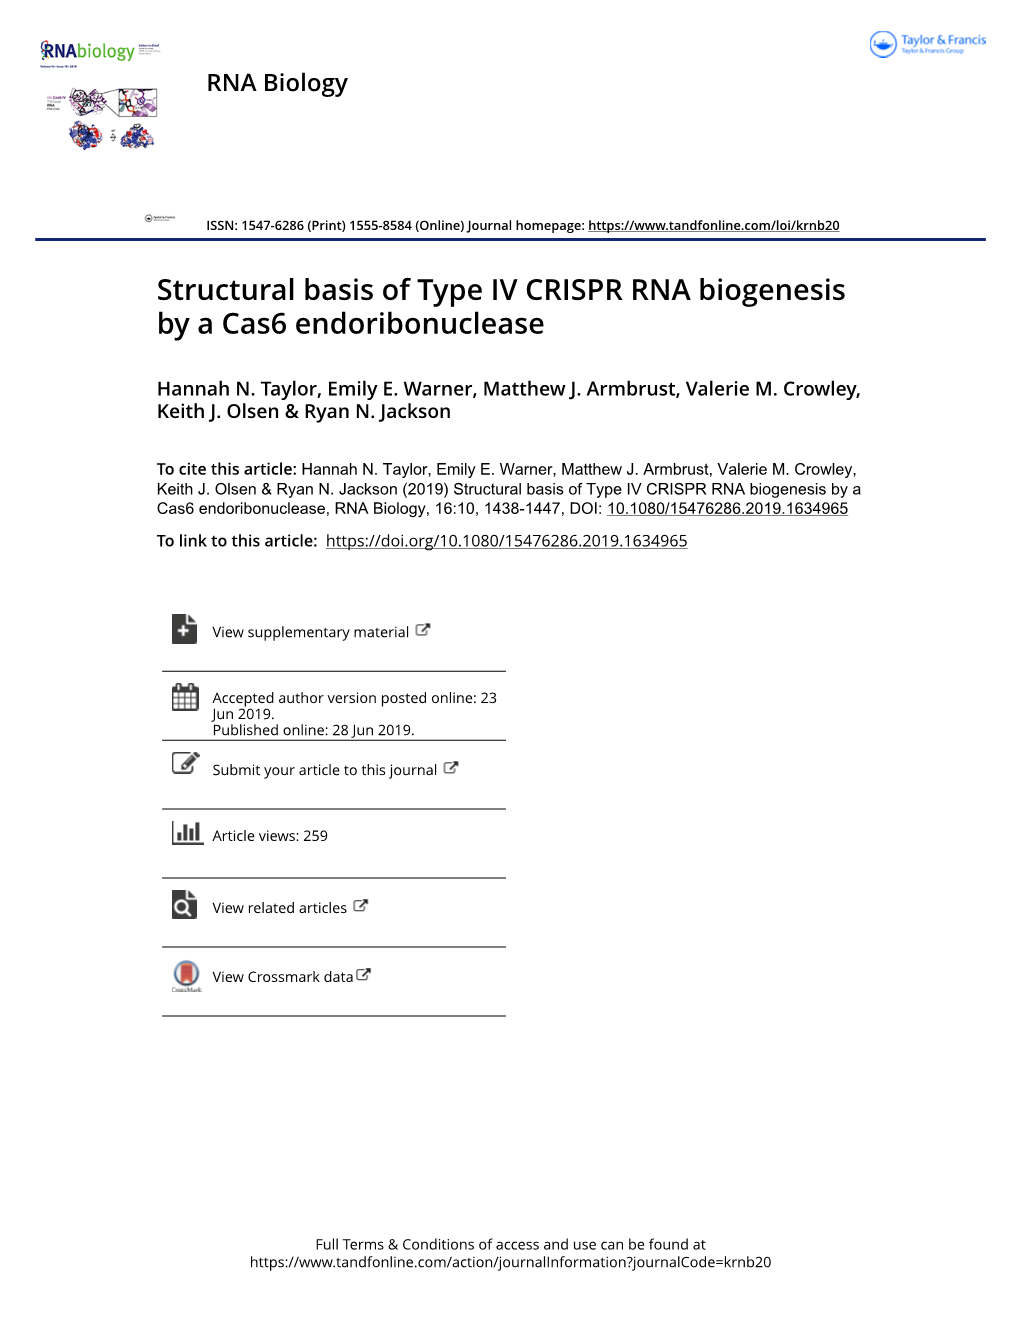 Structural Basis of Type IV CRISPR RNA Biogenesis by a Cas6 Endoribonuclease